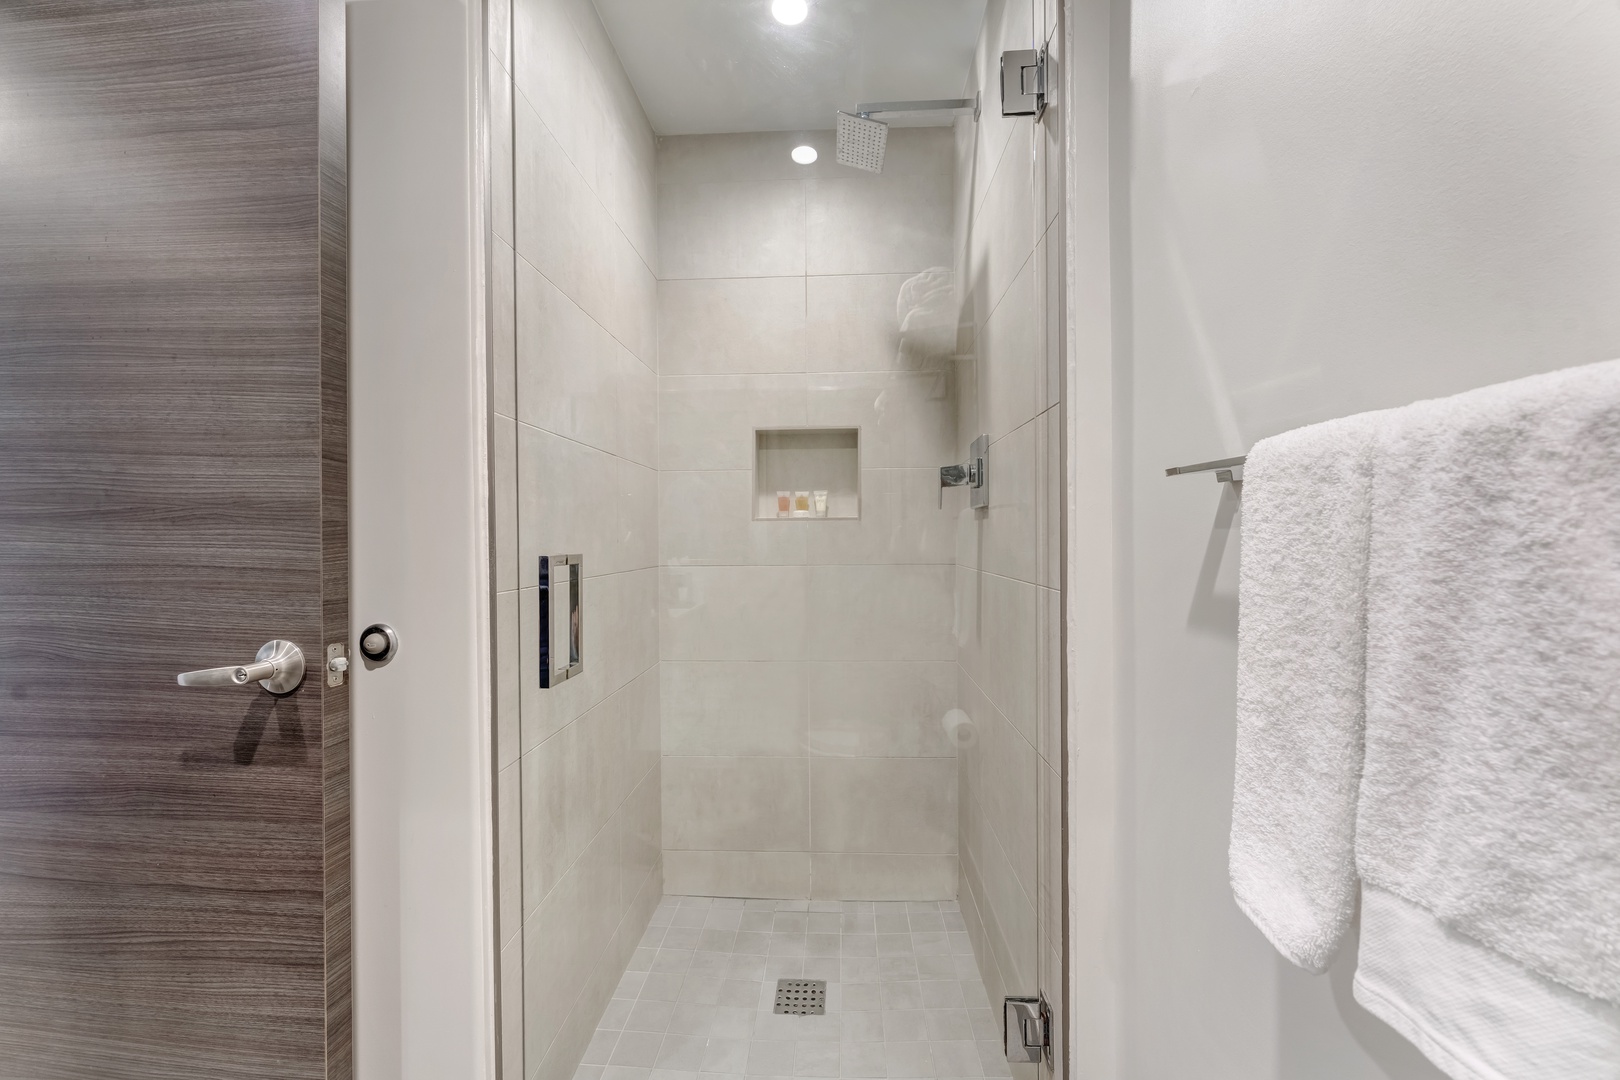 The full bathroom offers a single vanity & spa-like glass shower